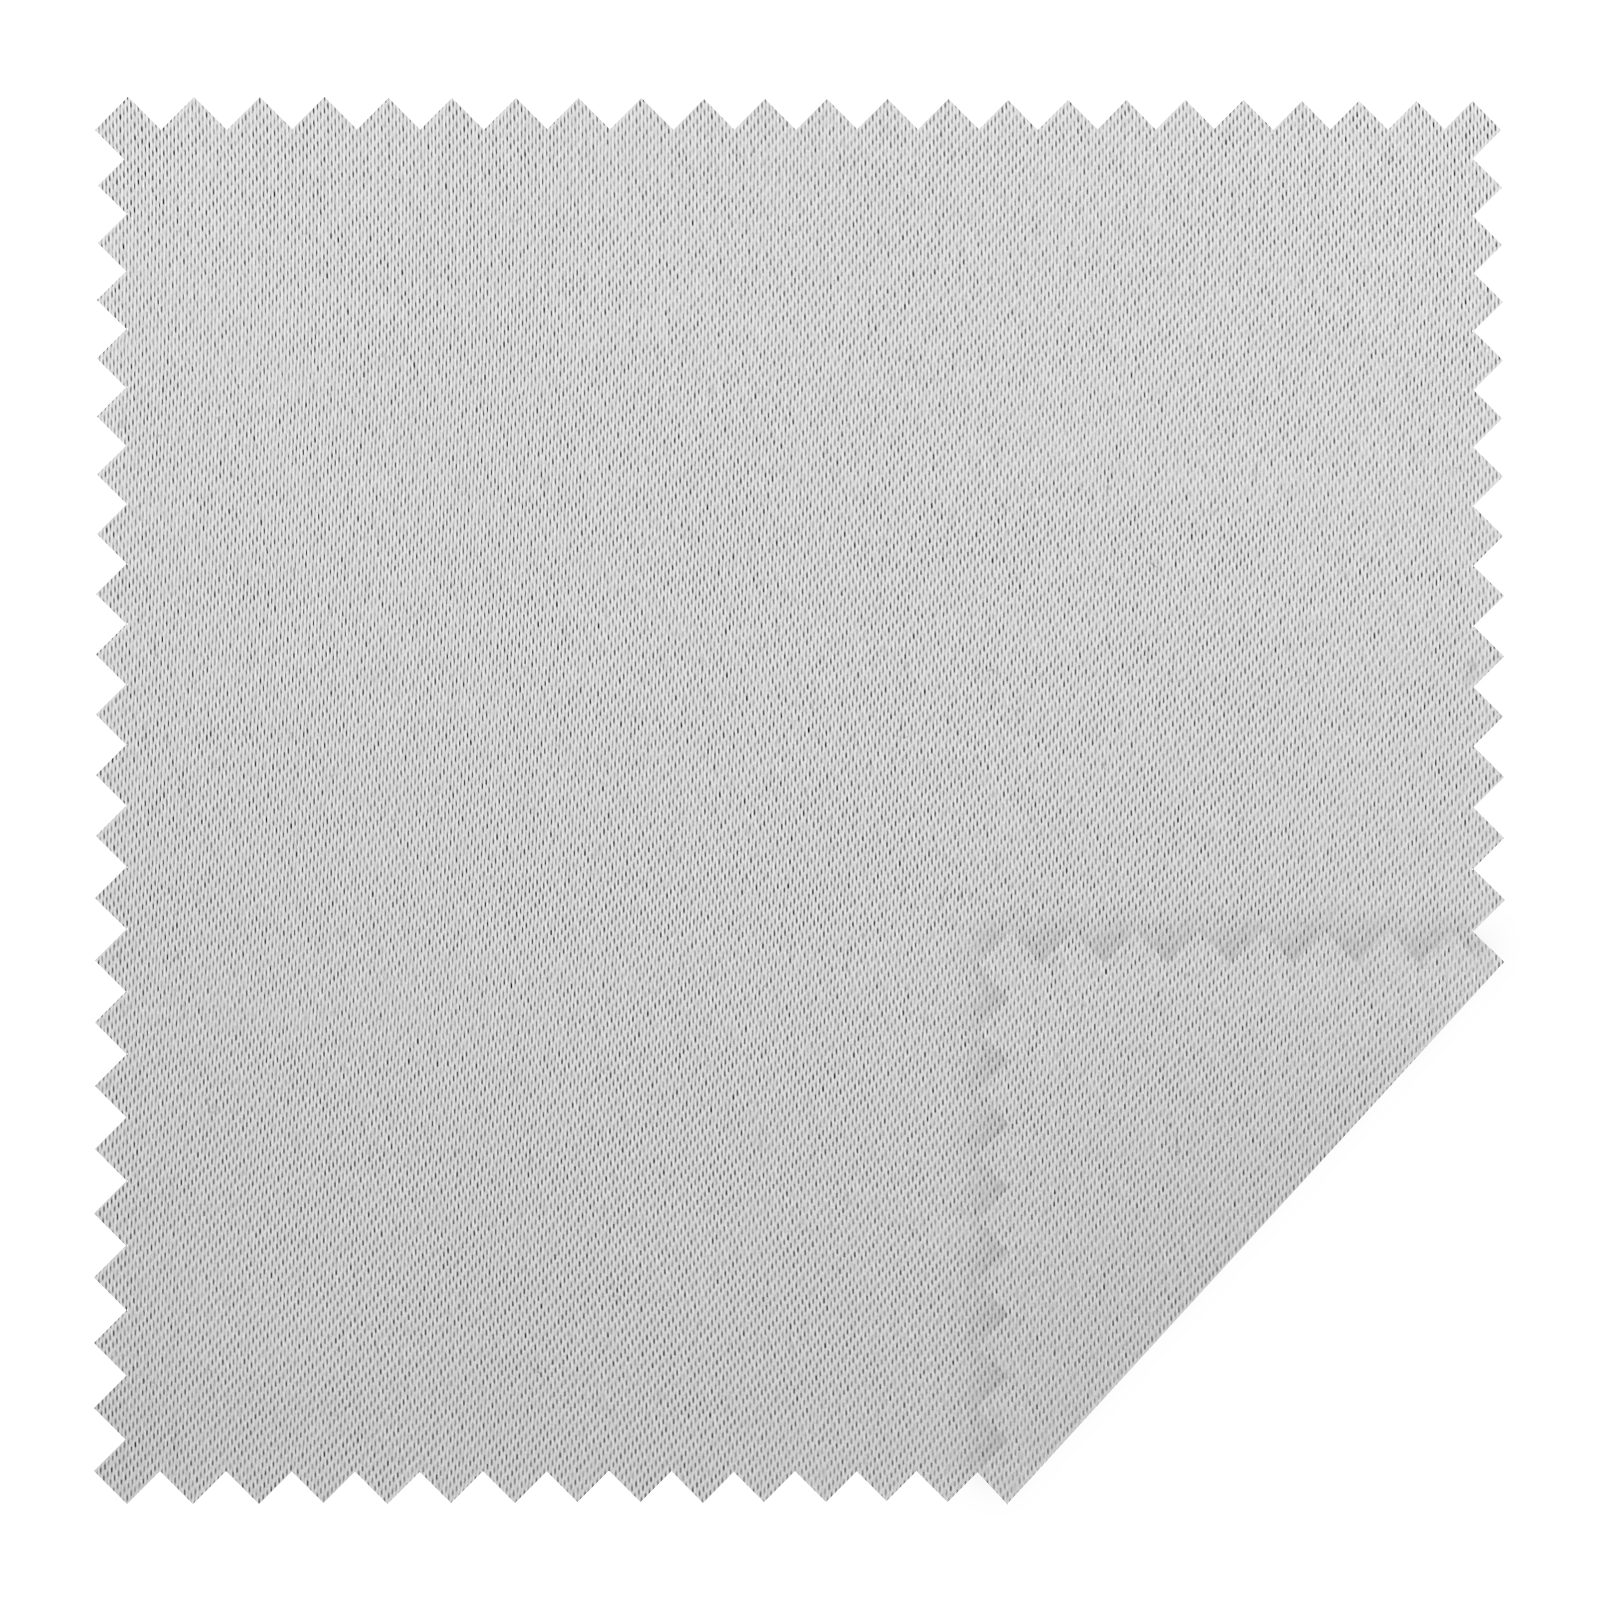 Liner greyish white 90% blackout R024